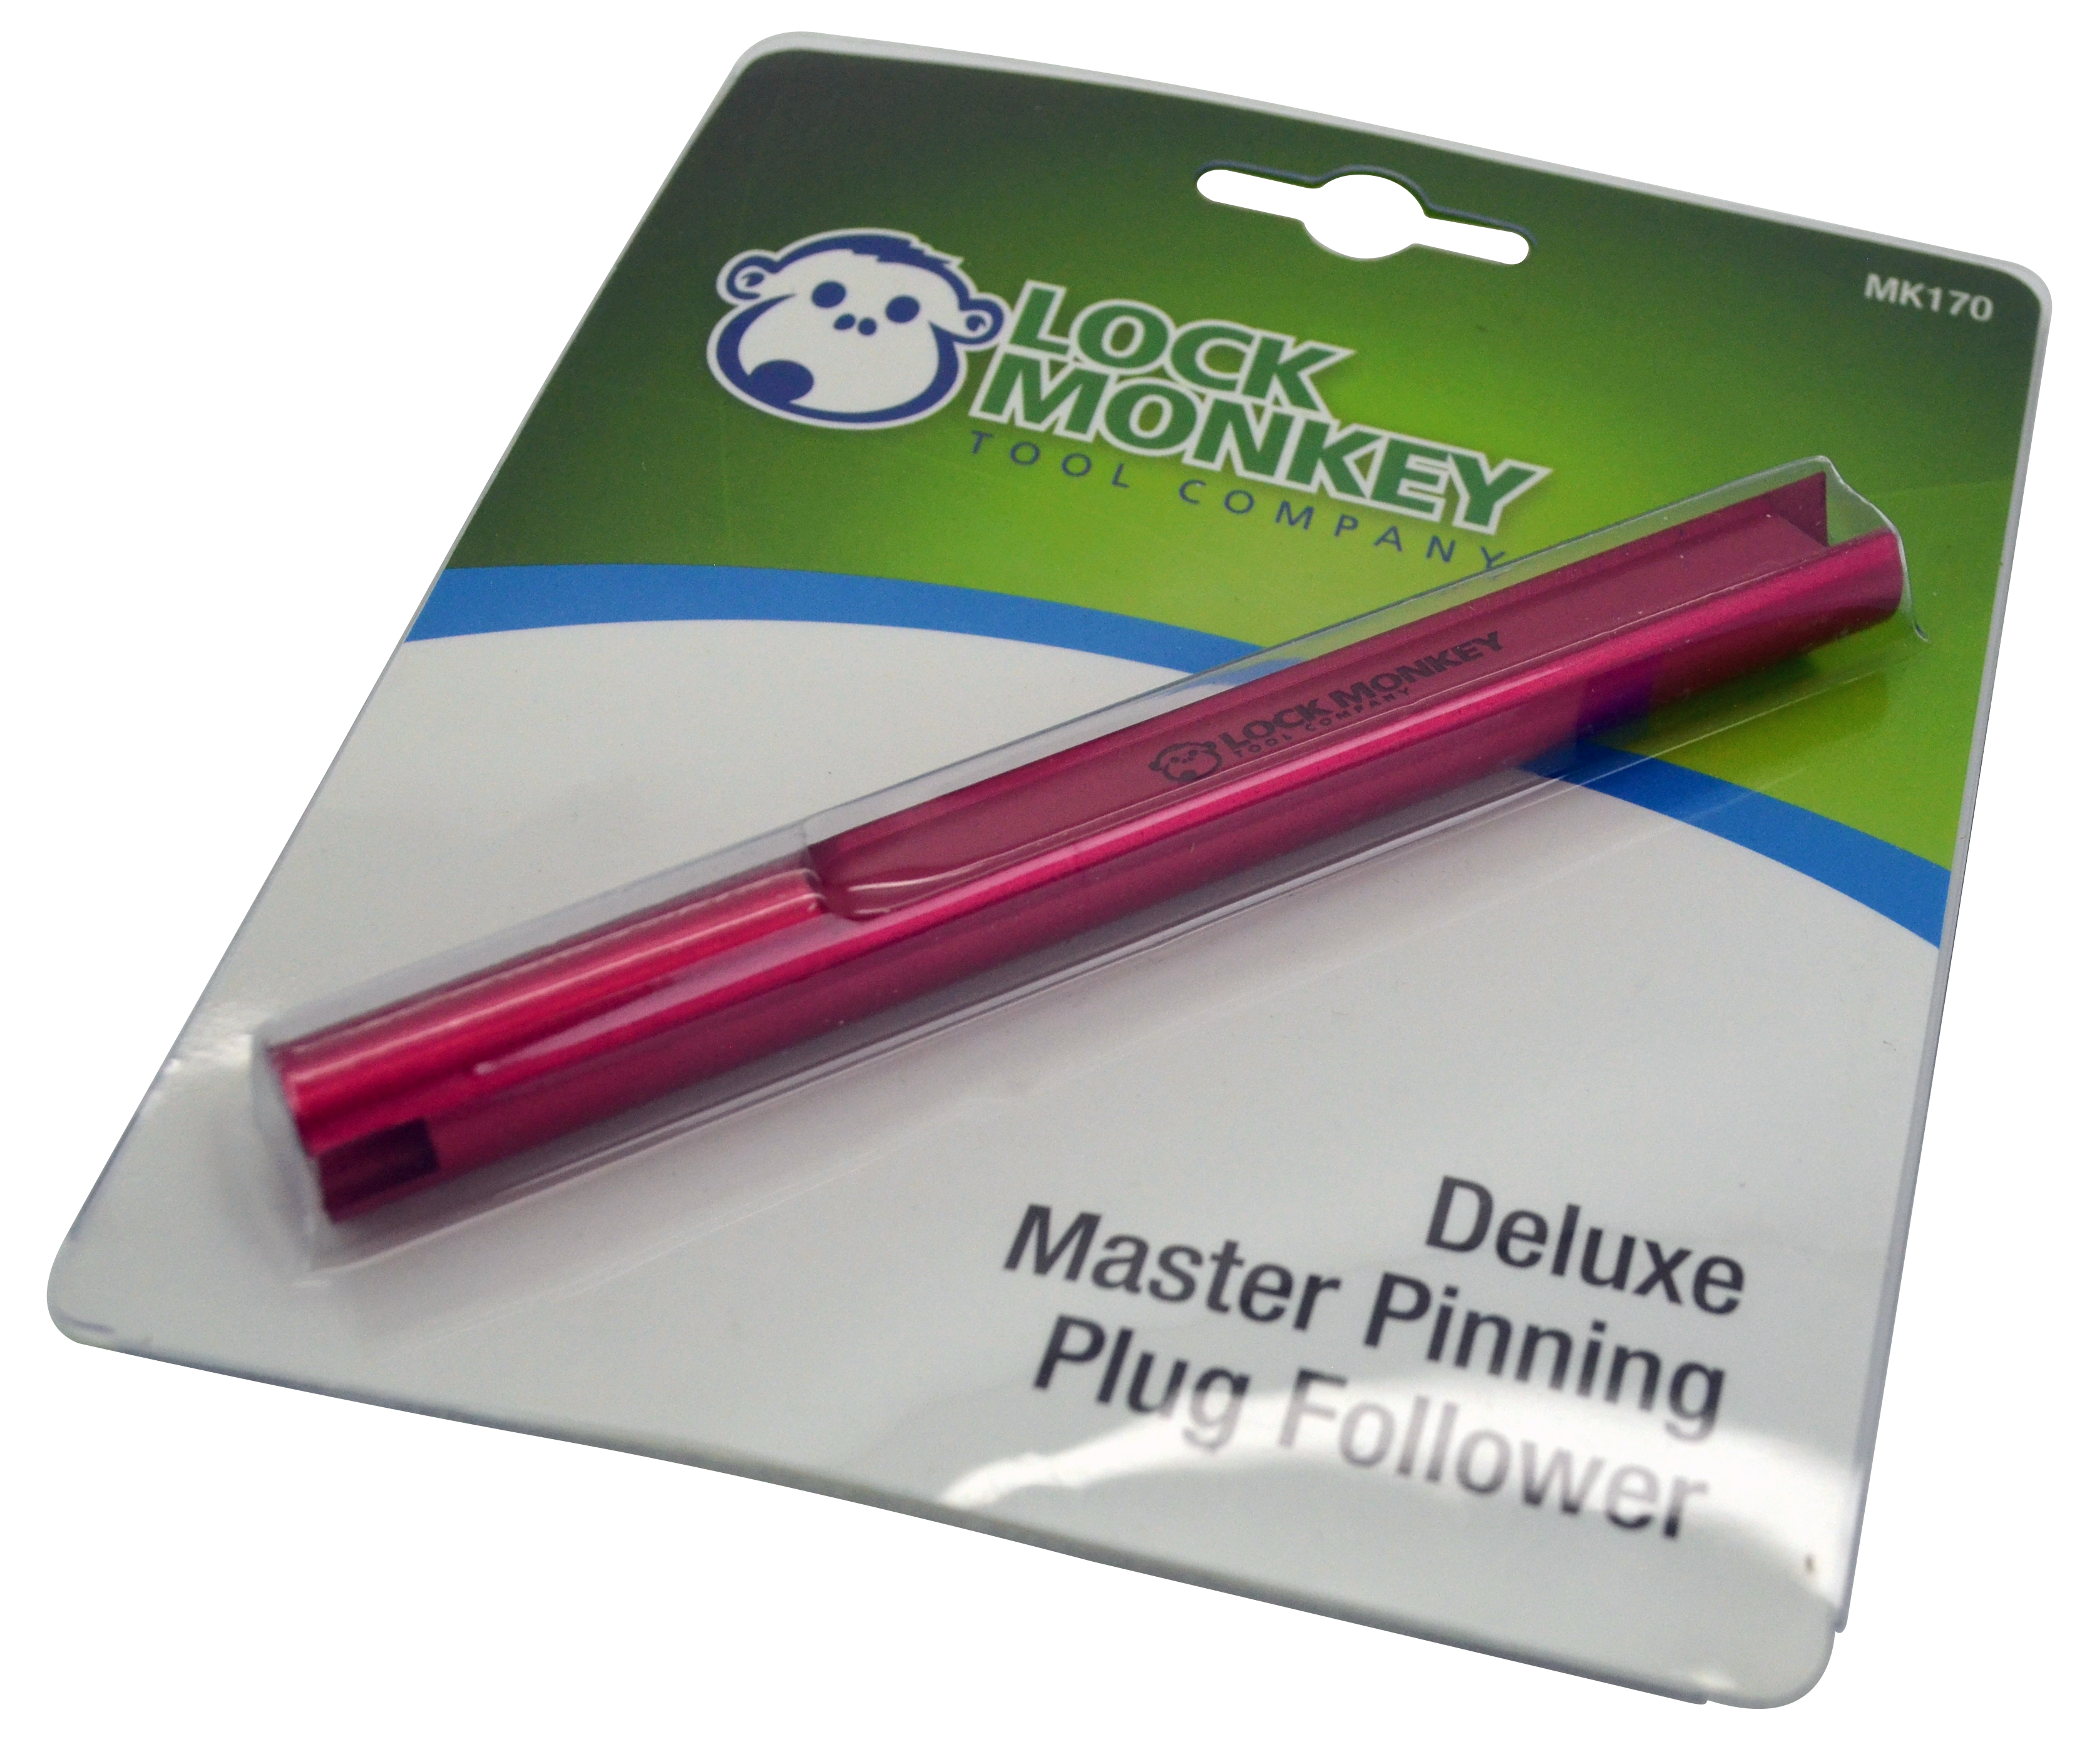 Master Pin Plug Follower - Lock Monkey - Locksmith tools - MK170